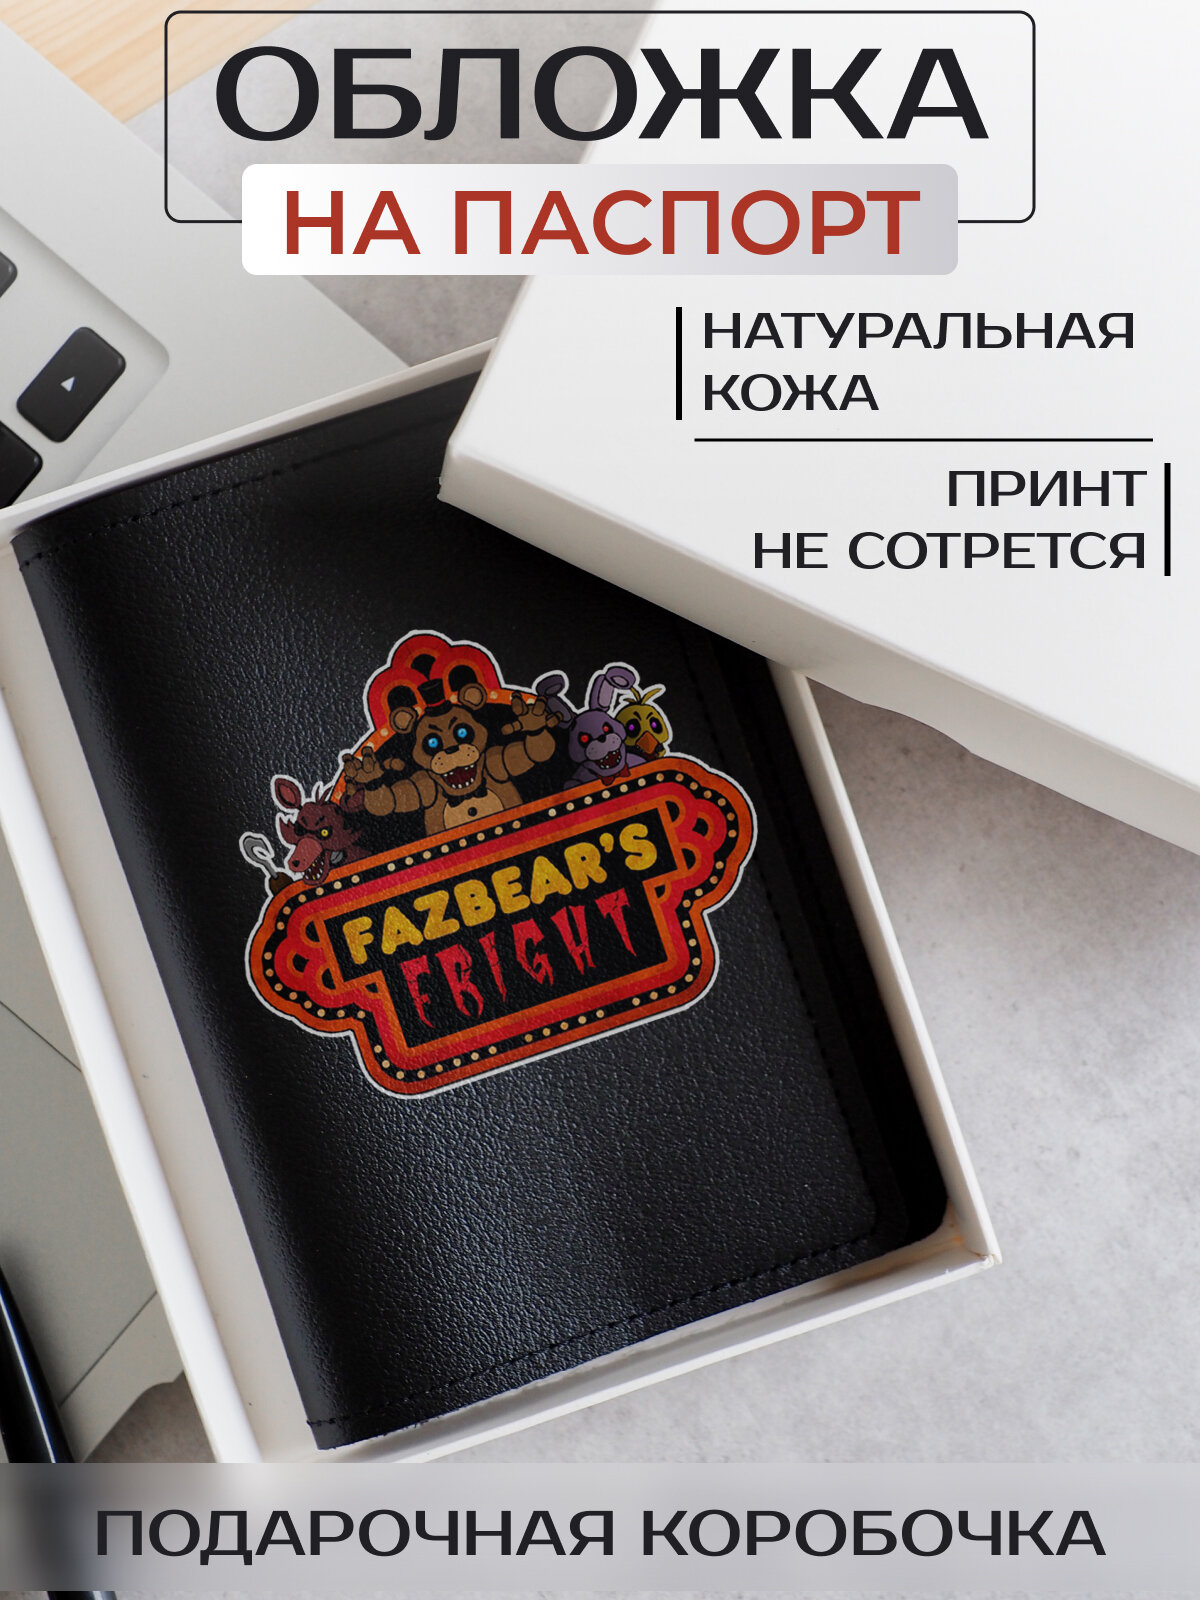 Обложка RUSSIAN HandMade 